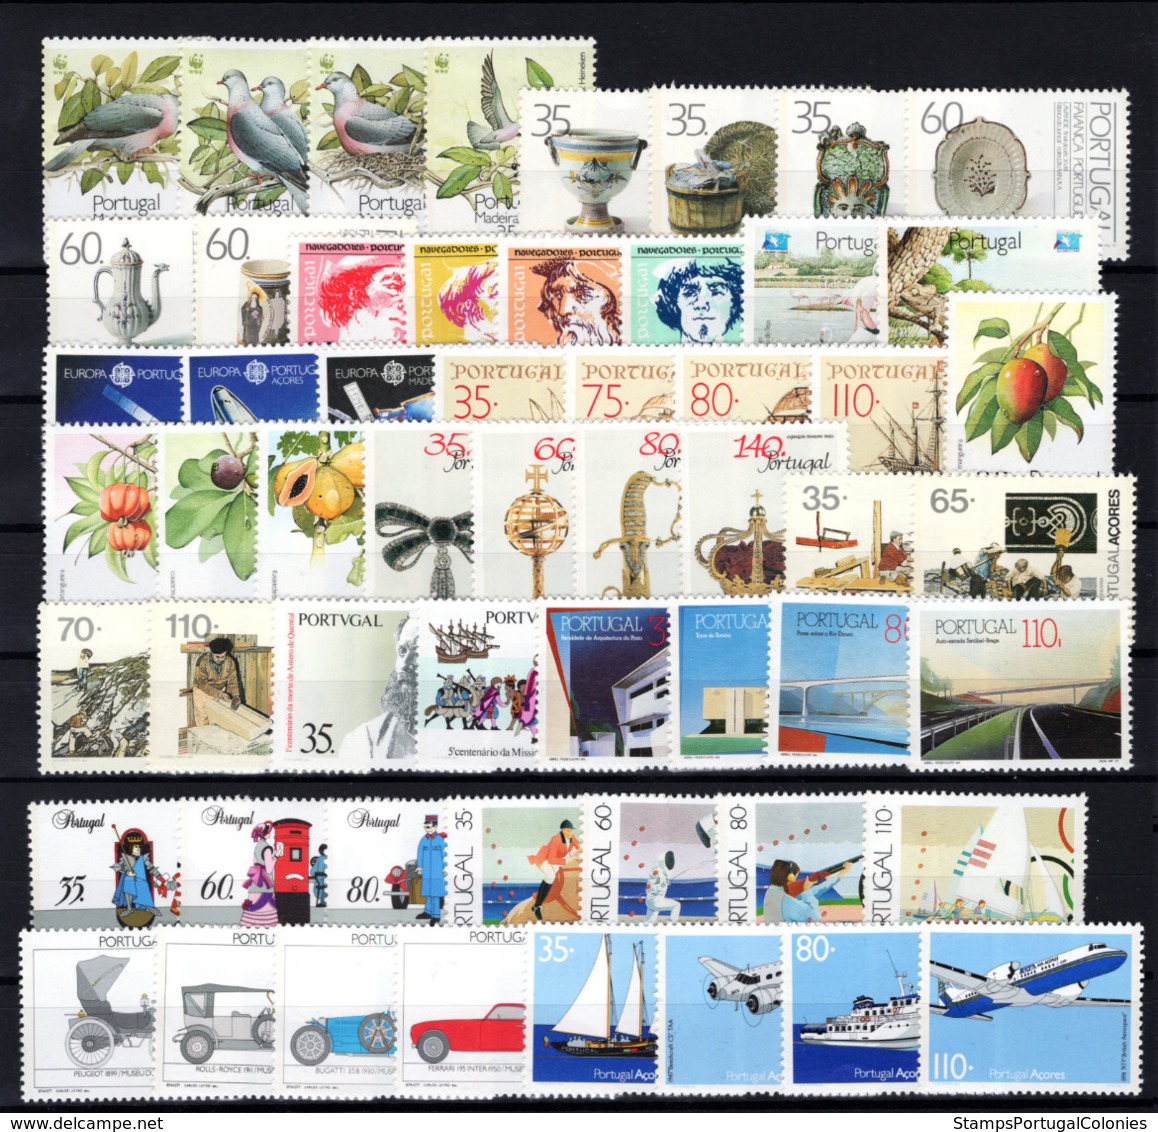 1991 Portugal Azores Madeira Complete Year MNH Stamps. Année Compléte NeufSansCharnière. Ano Completo Novo Sem Charneira - Années Complètes